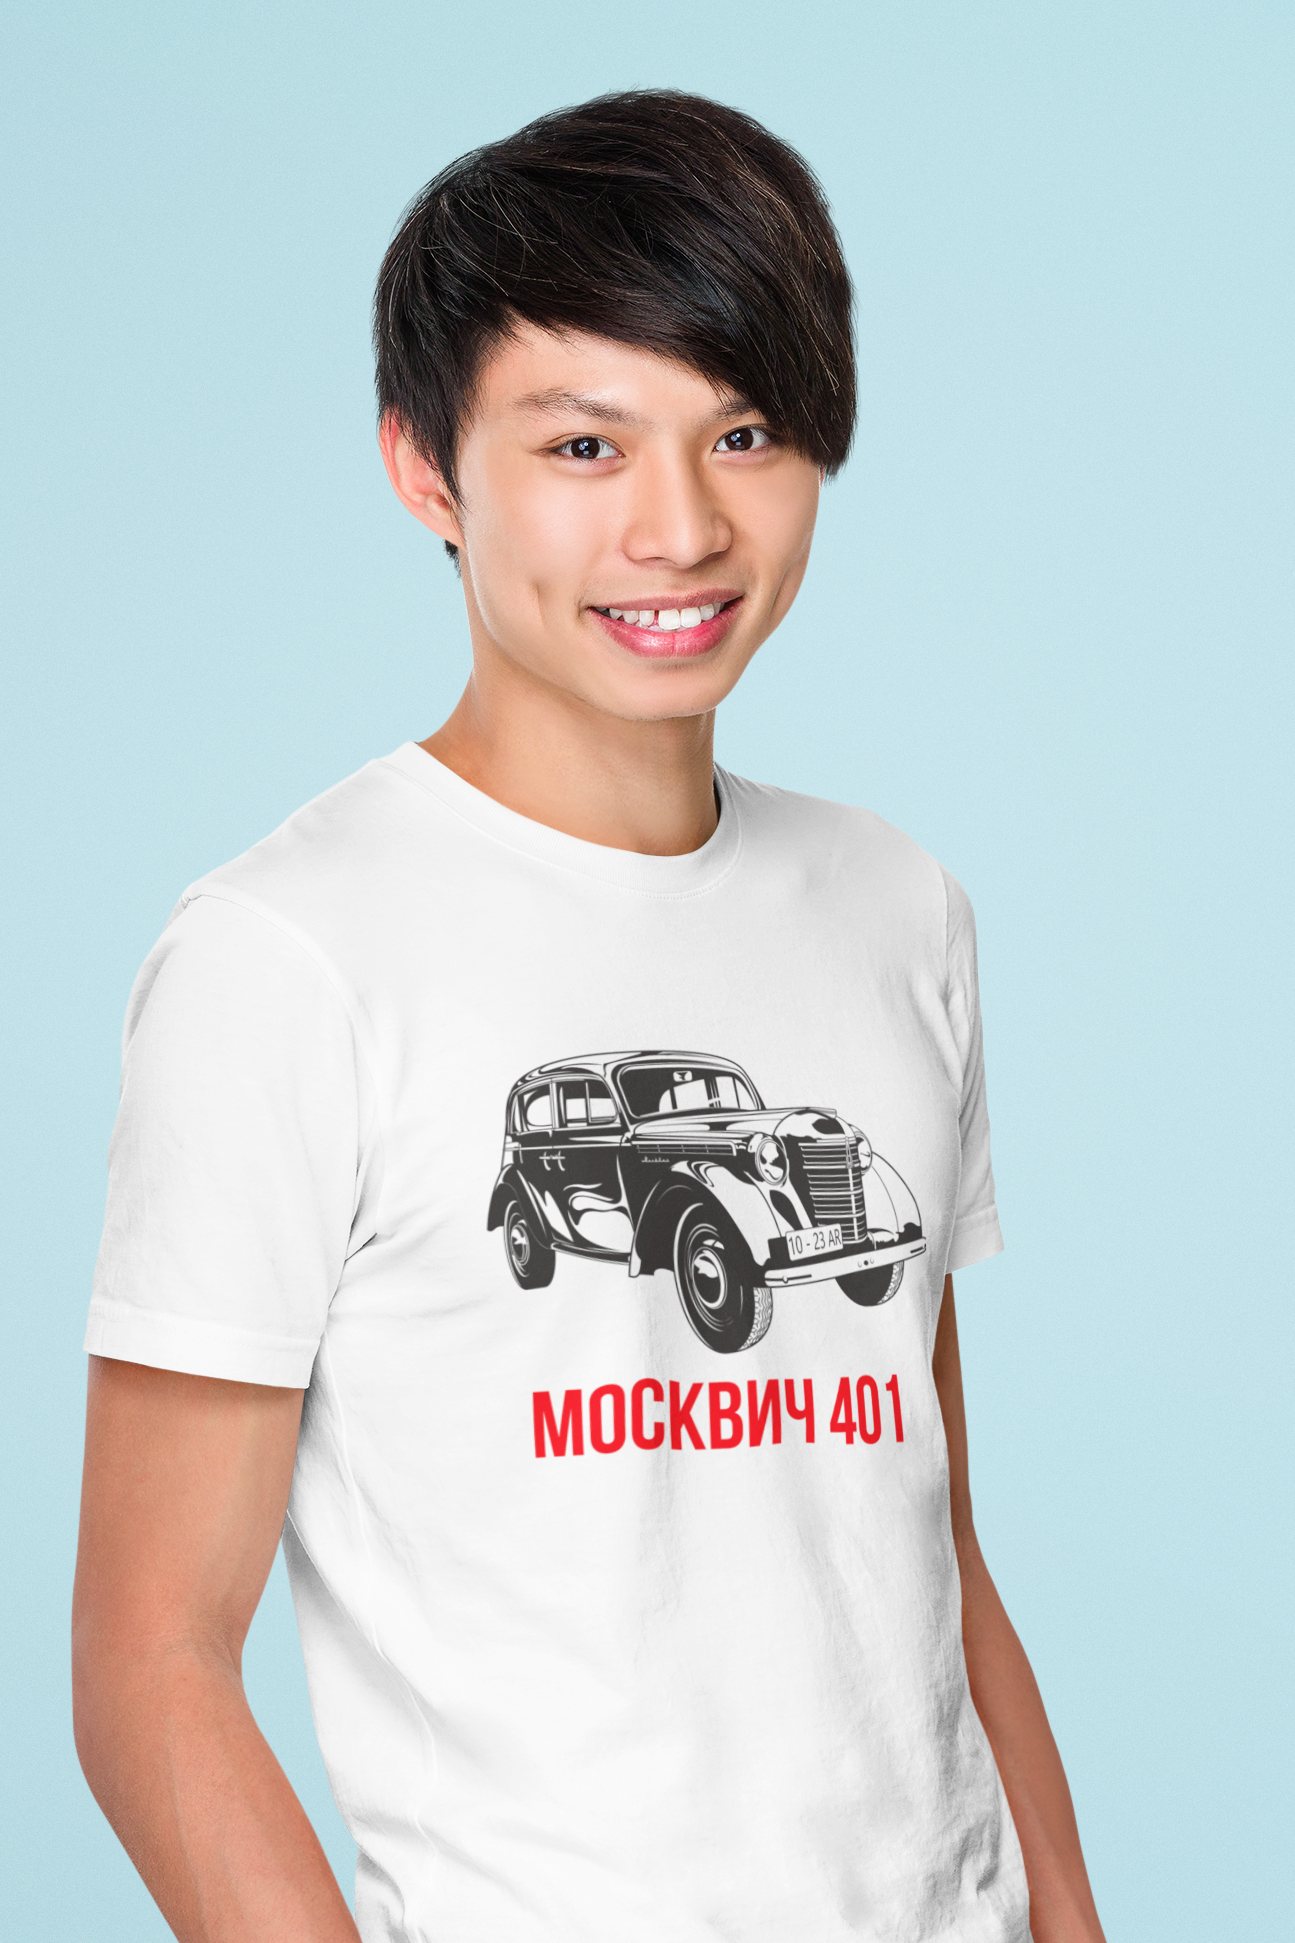 MOSKVICH 401 Shirt